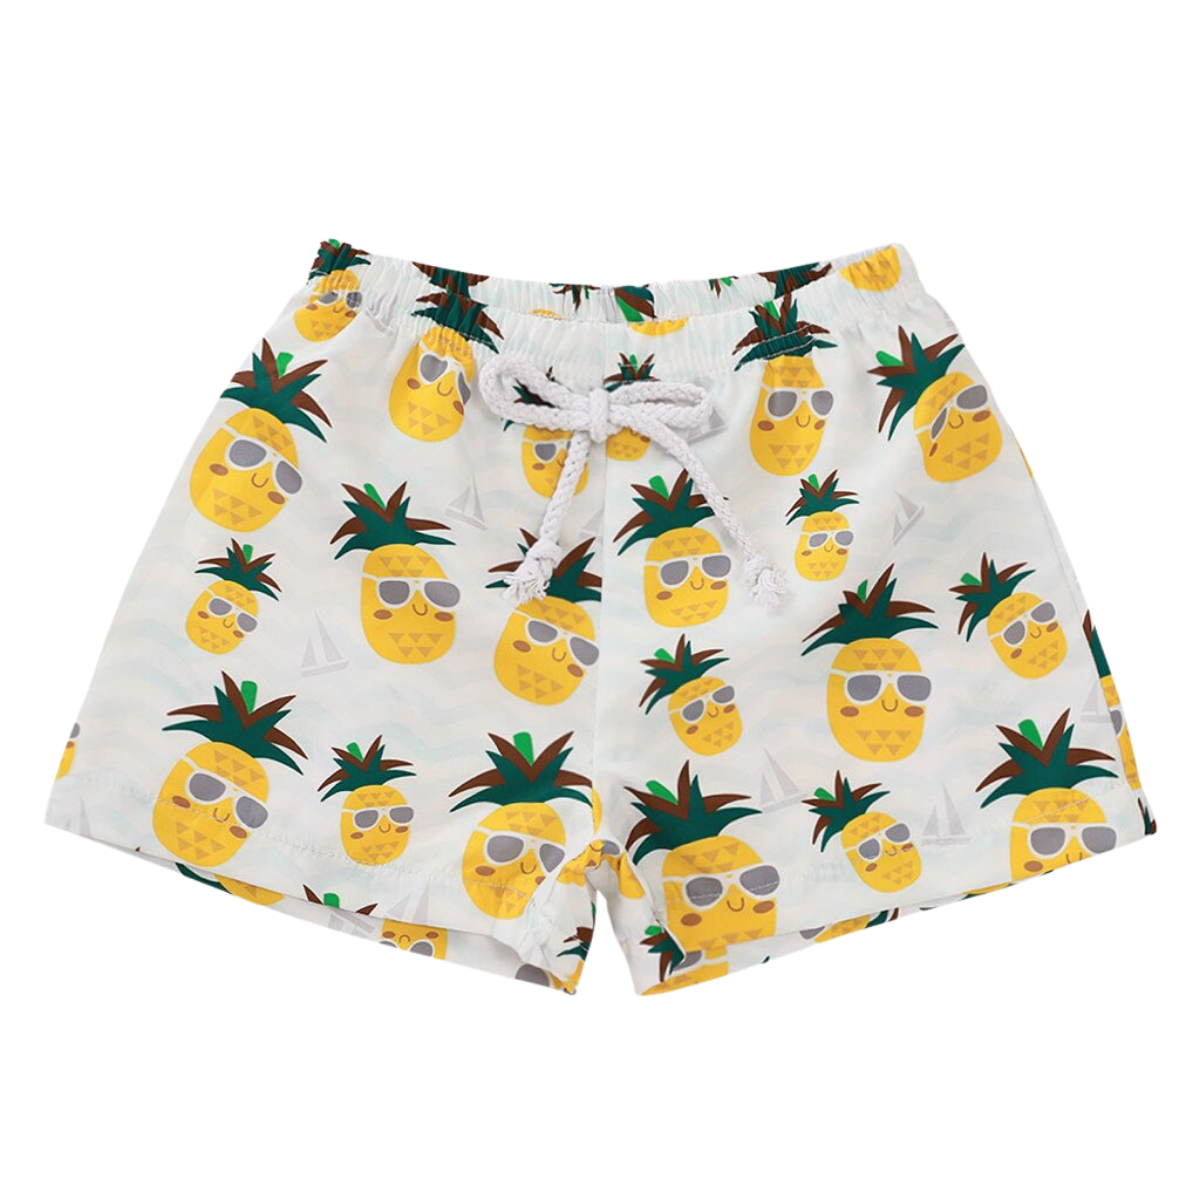 Pineapple Shades Toddler Beach Shorts